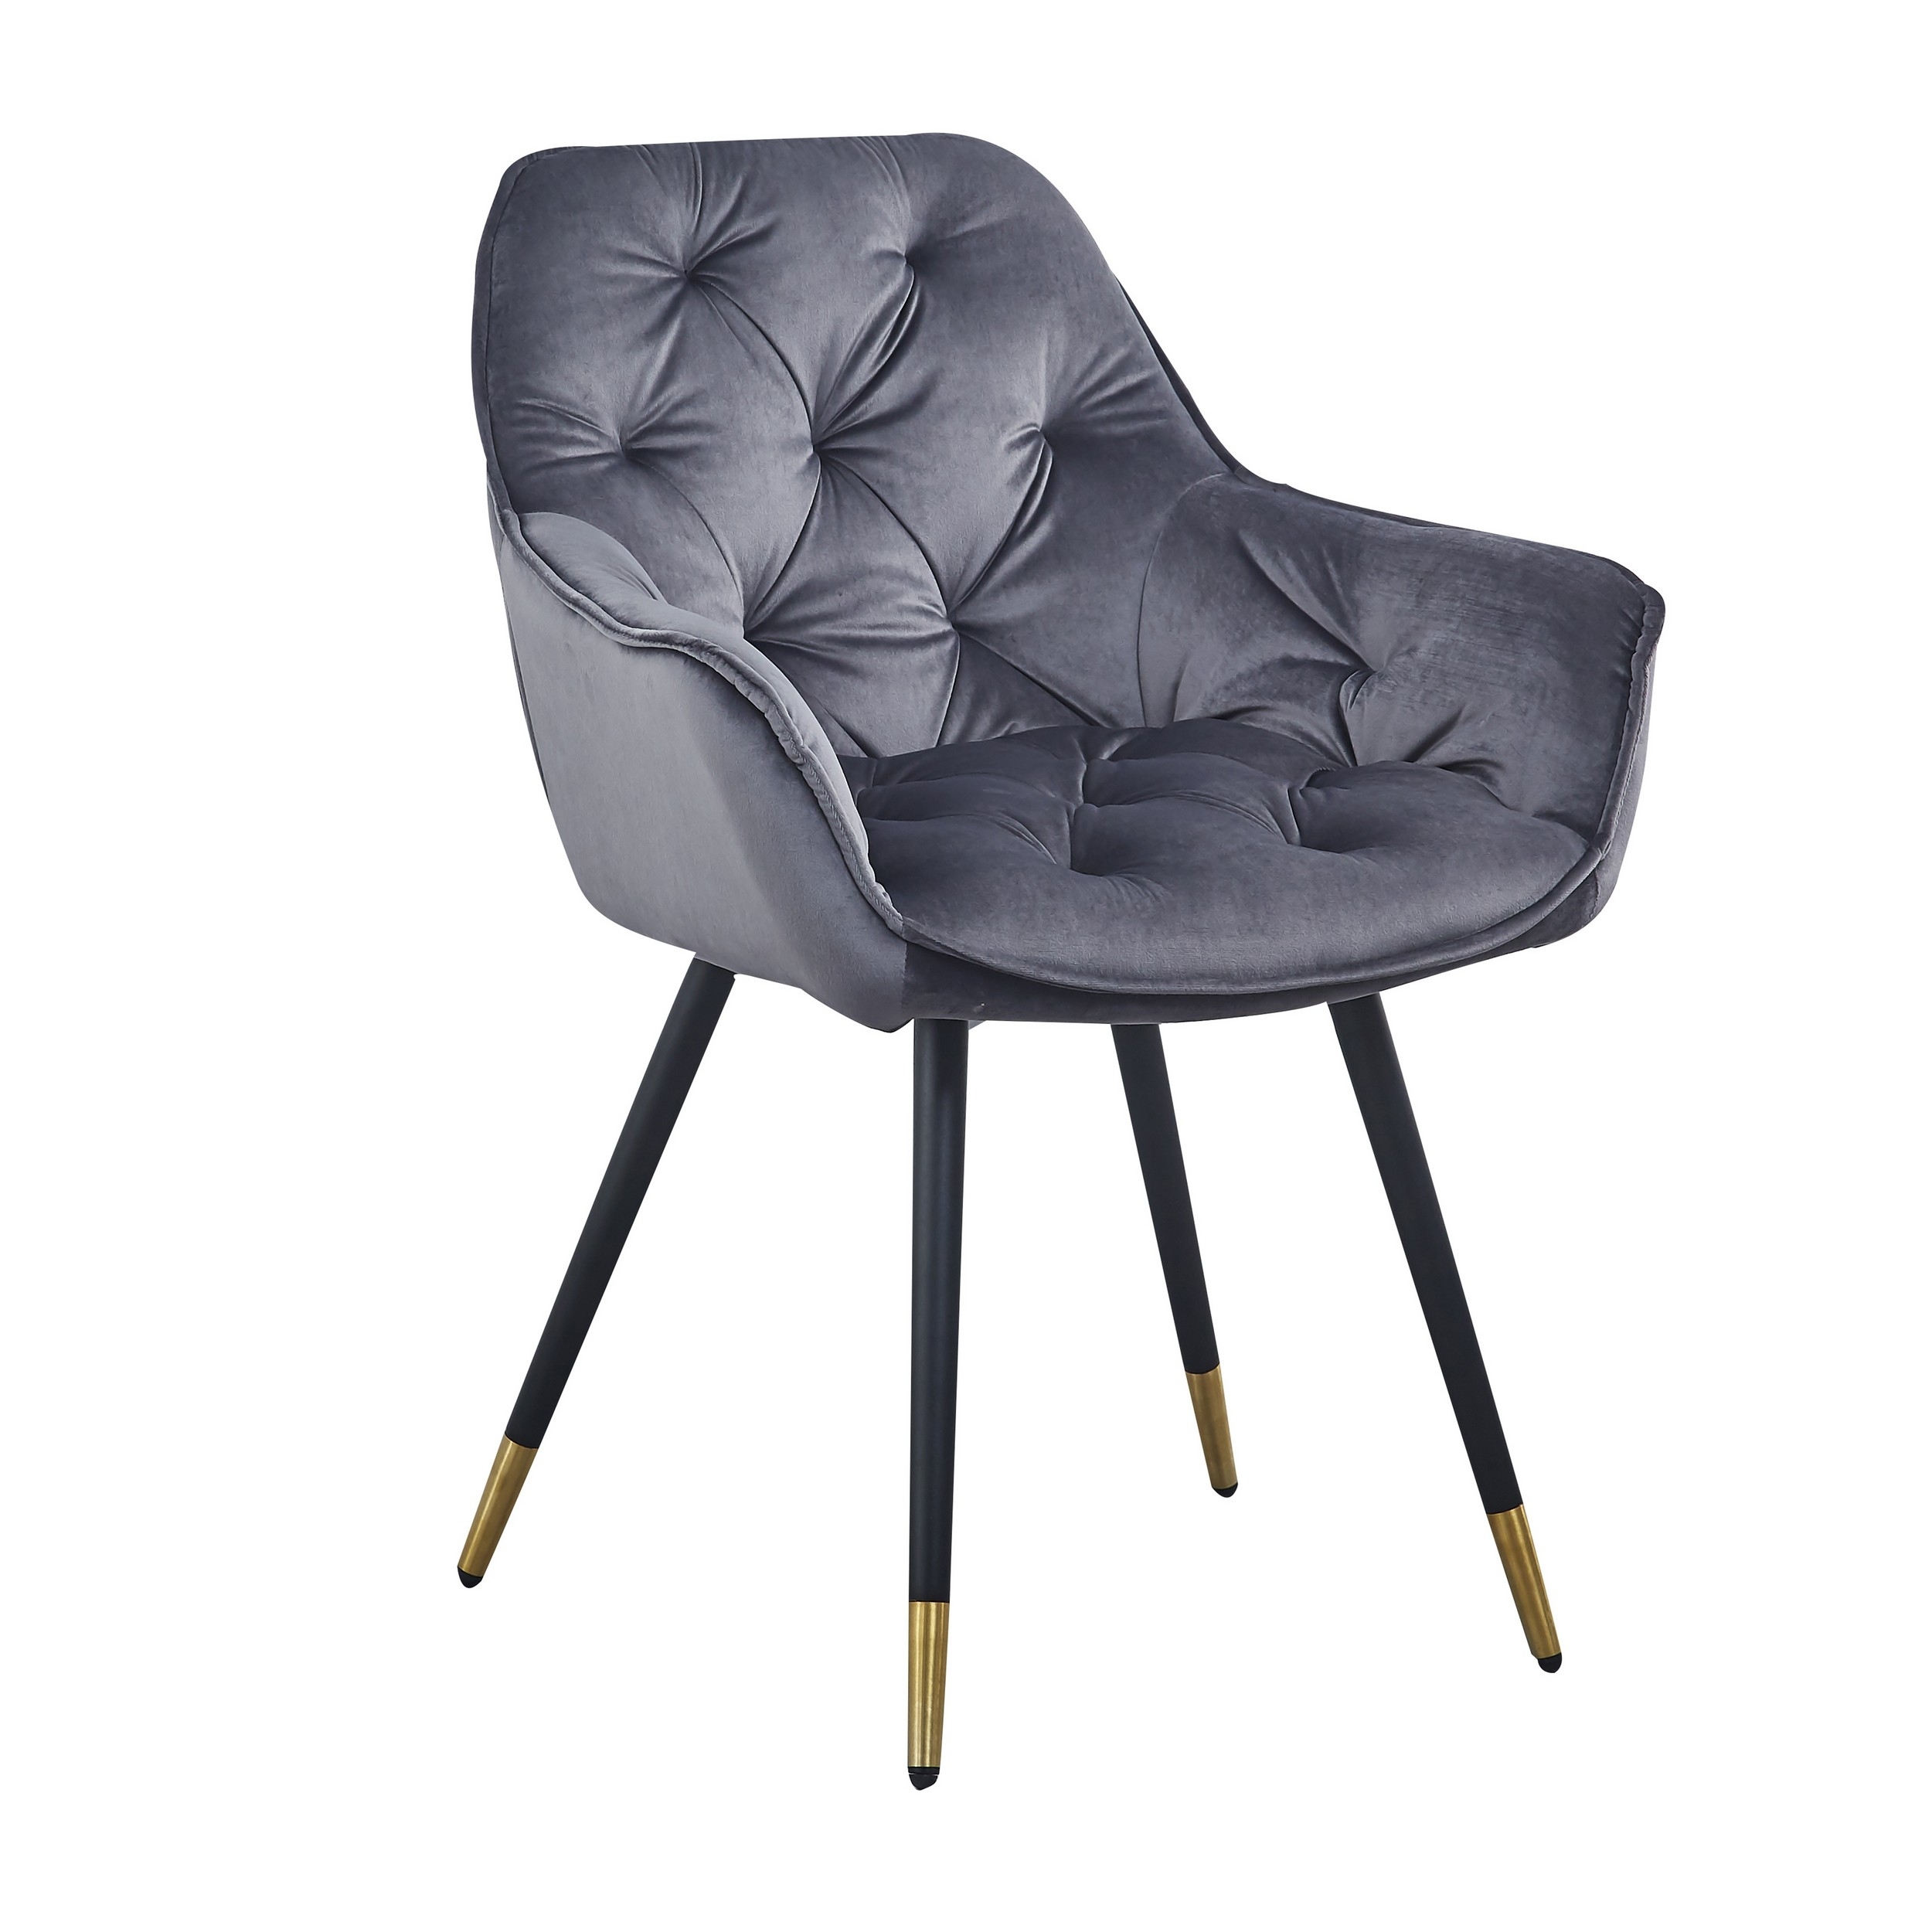 Alix 25 Inch Modern Dining Chair, Button Tufted, Set Of 2, Gray, Black- Saltoro Sherpi